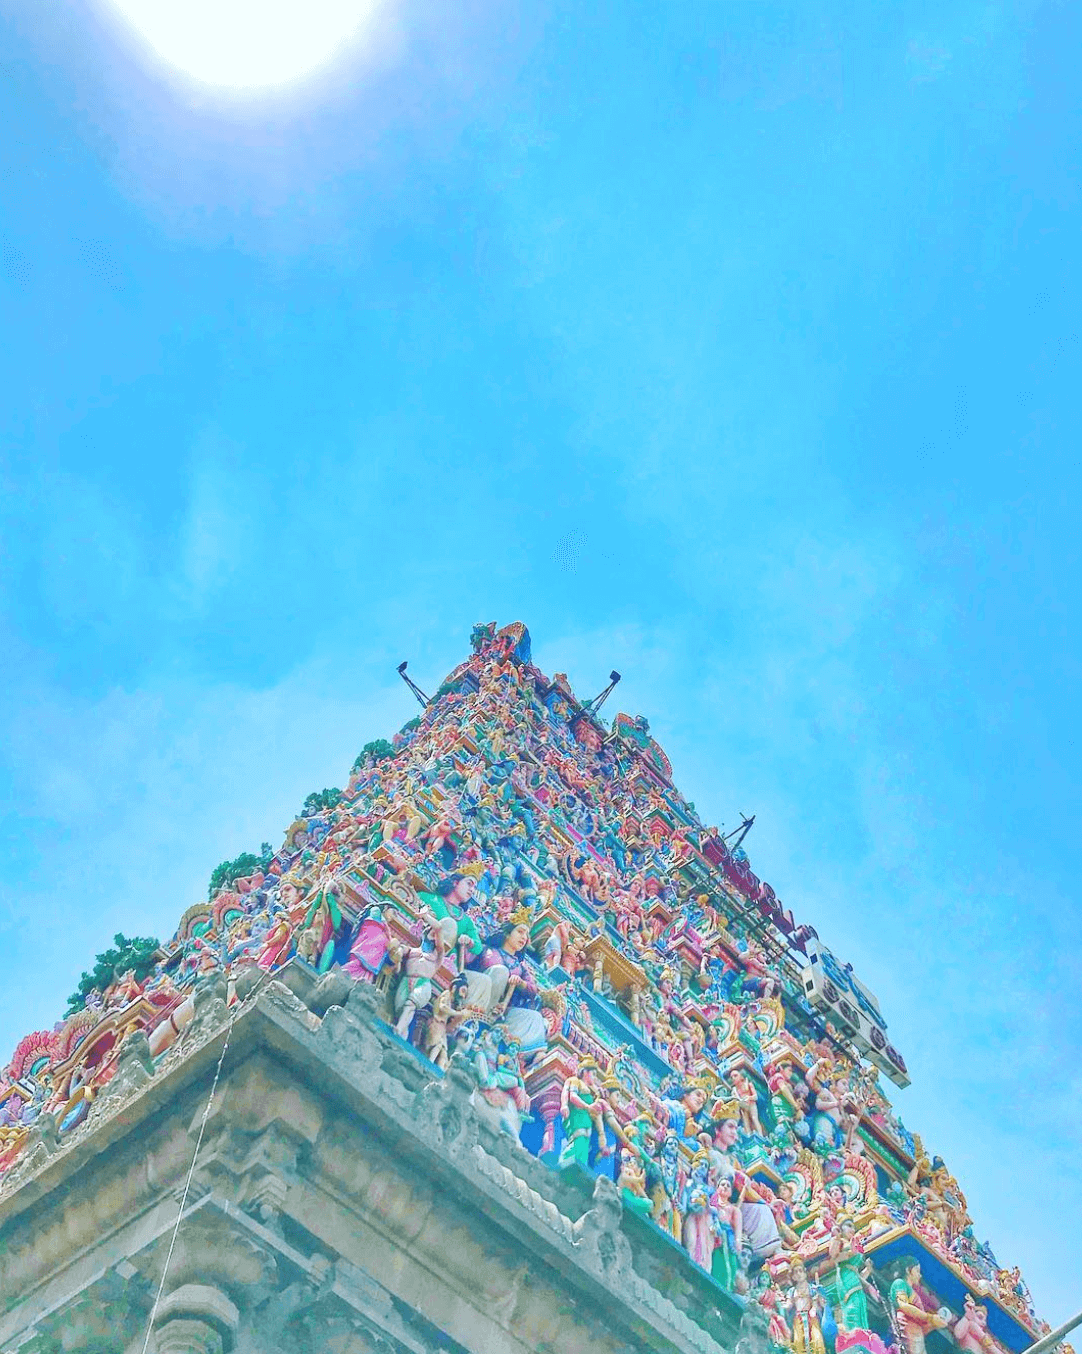 kapaleeshwarar temple, mylapore, chennai